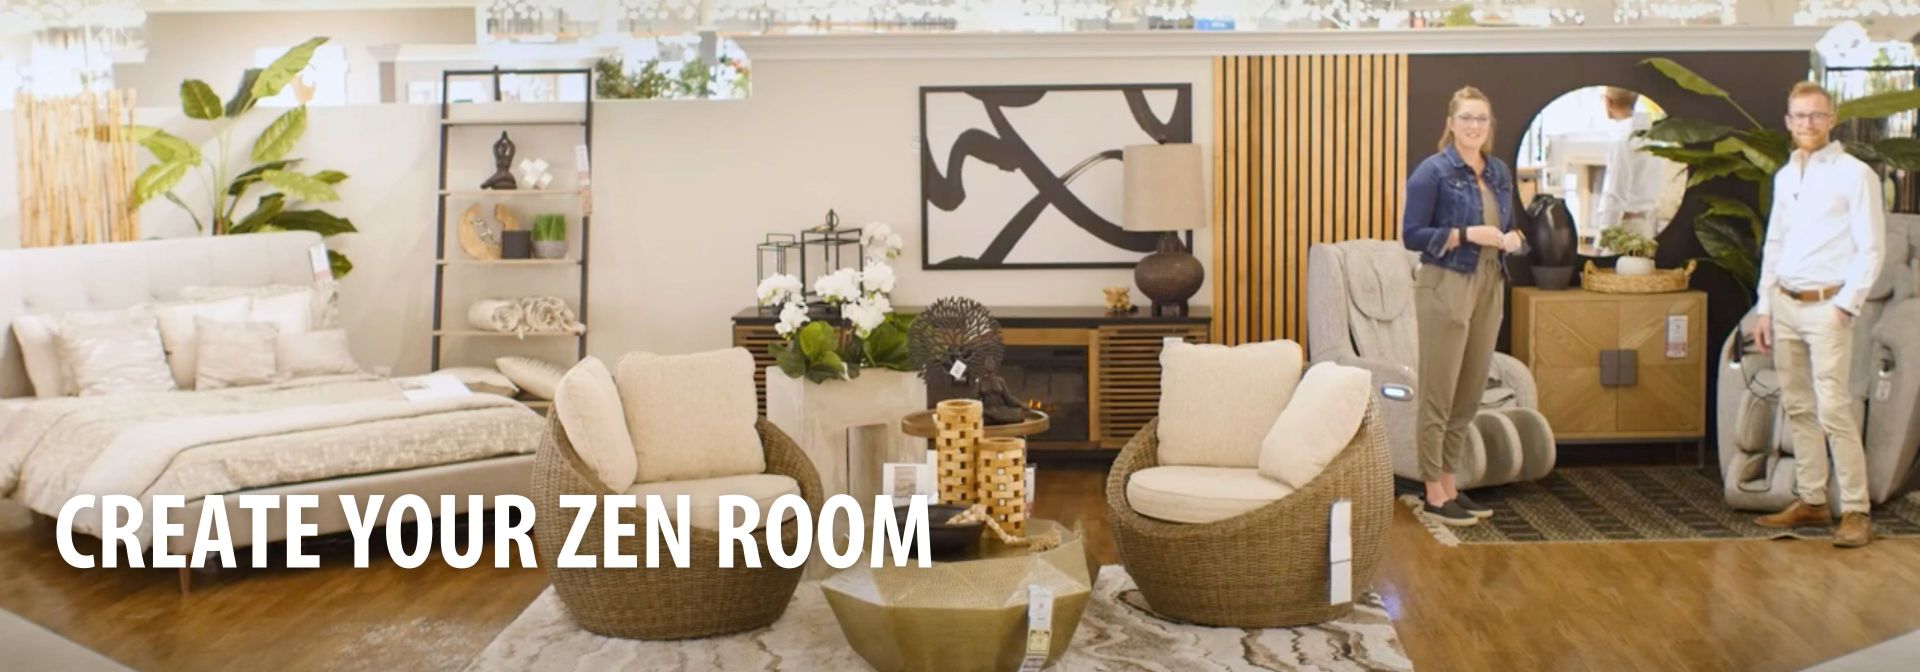 Designer's Den | Creating a Zen Room with a Massage Chair